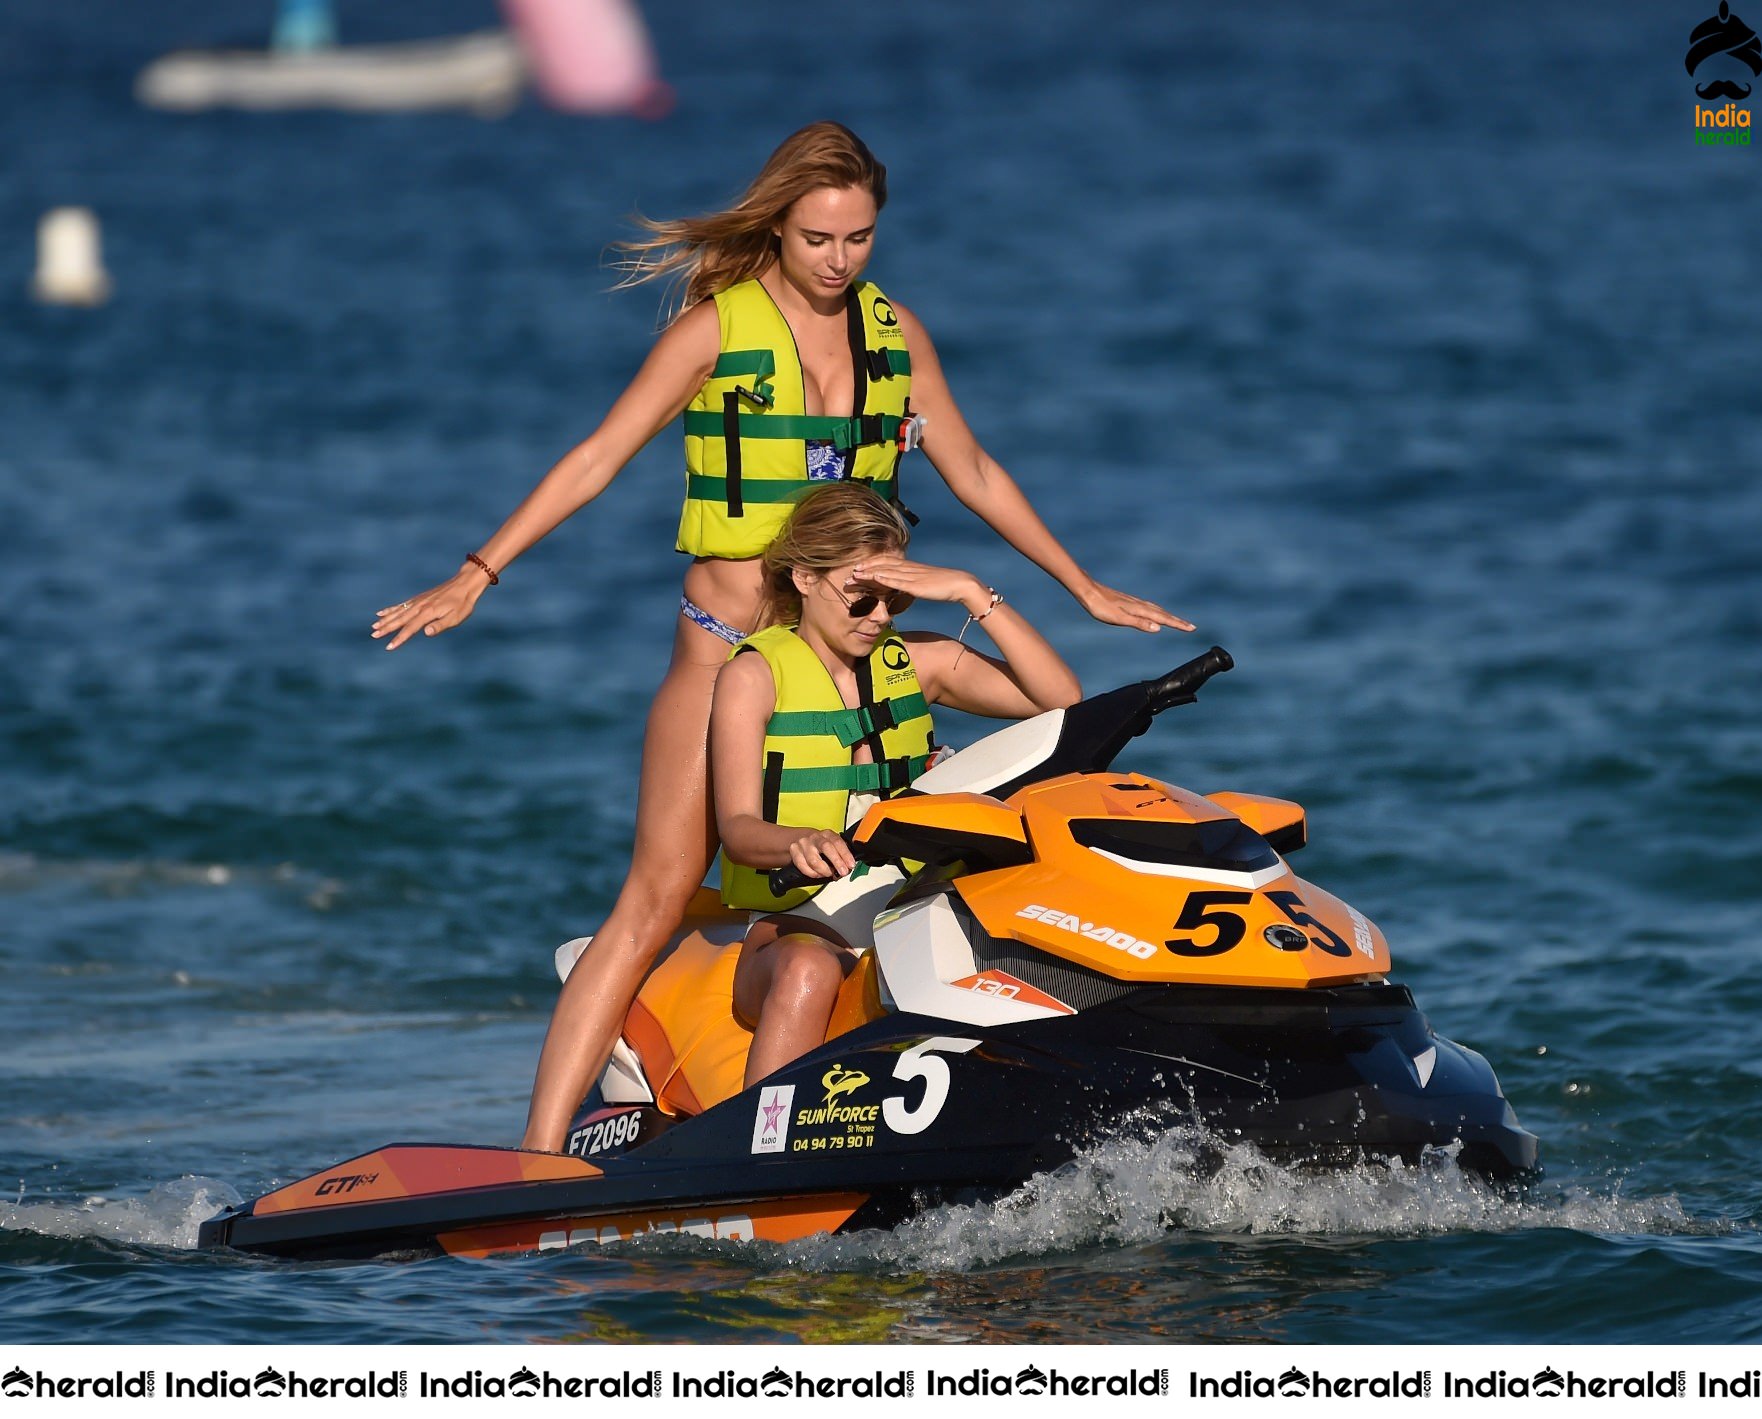 Kimberley Garner in Bikini and riding on a jet ski at St Tropez Set 1